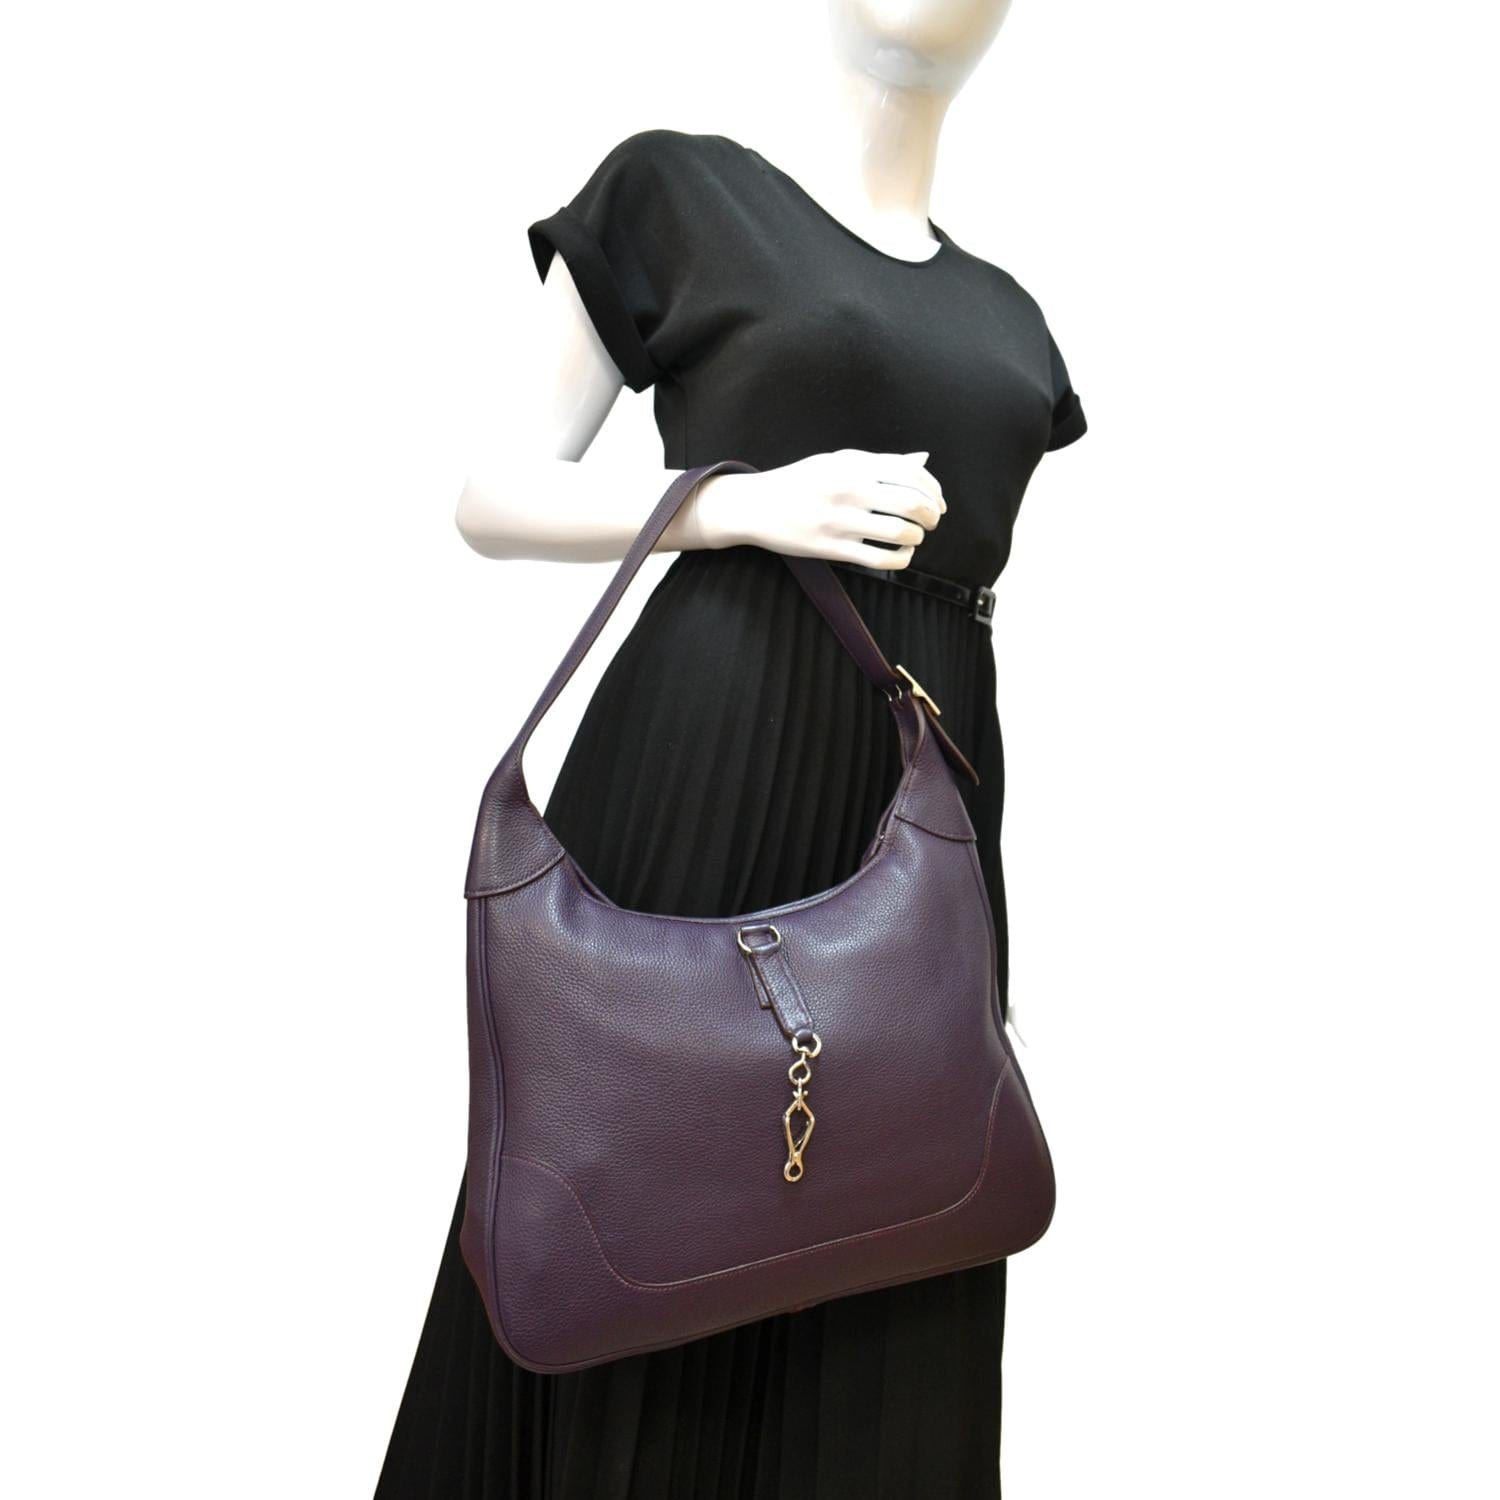 Aquarius bag Epi and black glazed leather, resin trimmi…